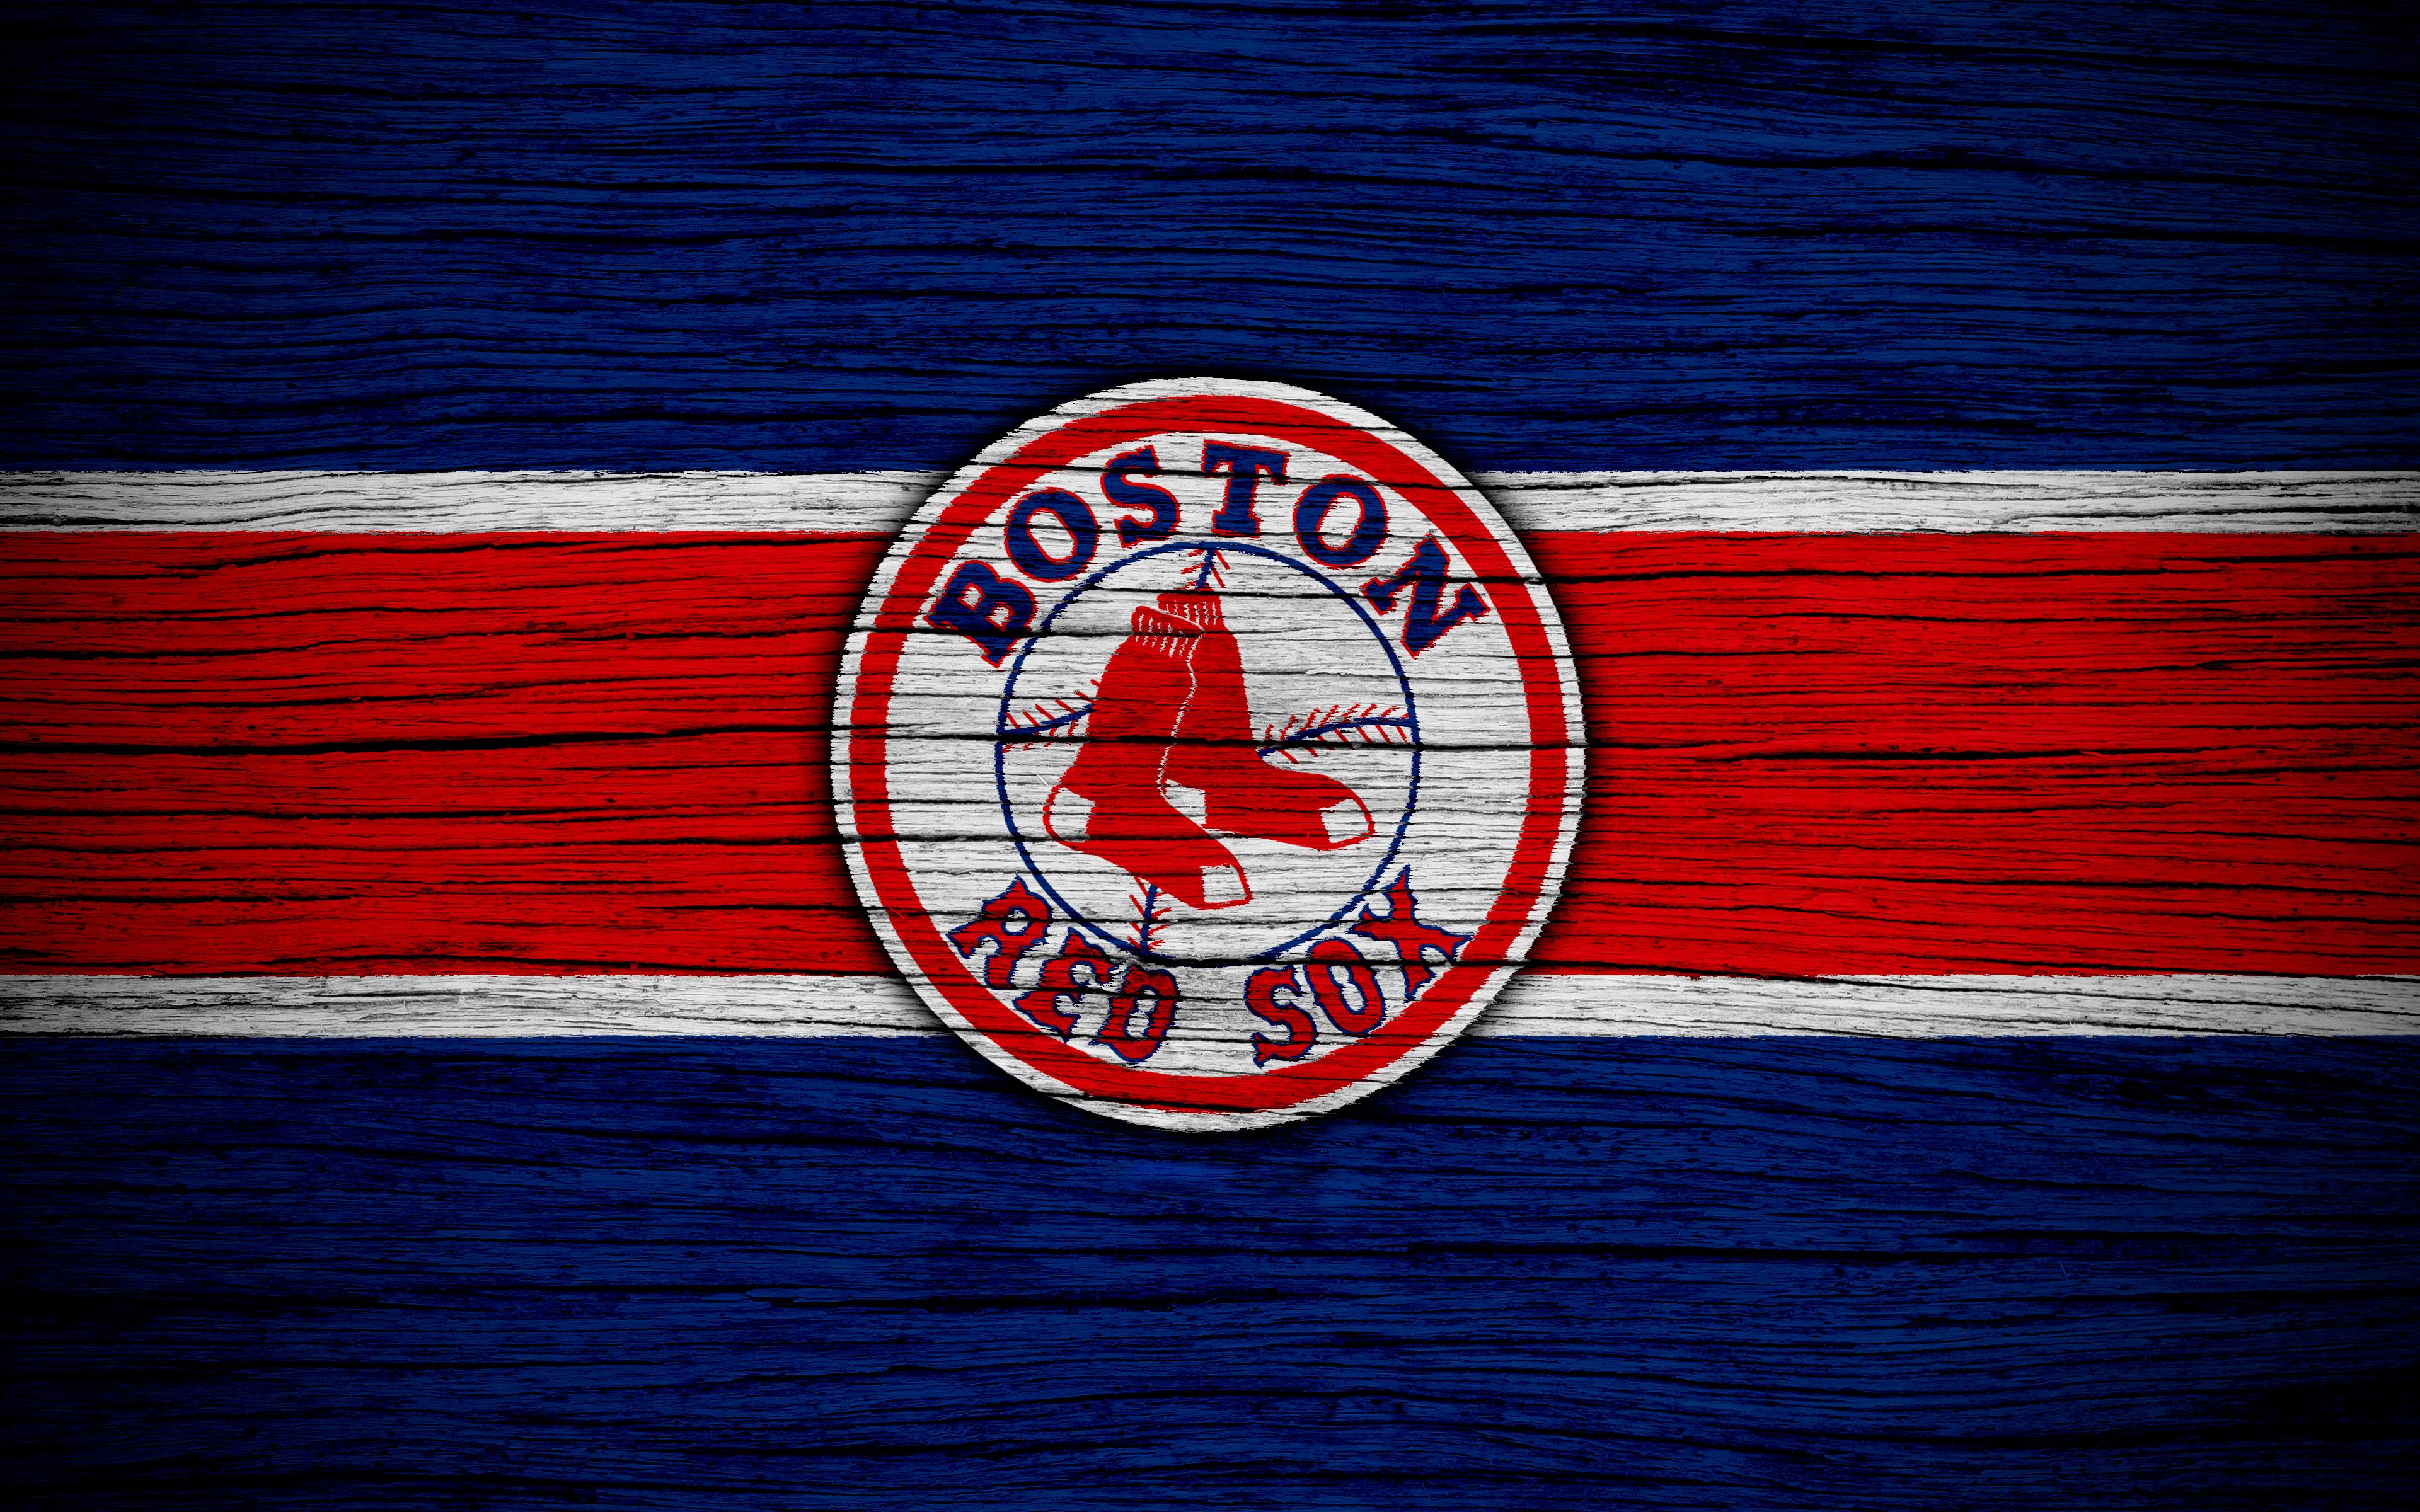 Boston Red Sox 4k Ultra HD Wallpaper. Background Imagex2400